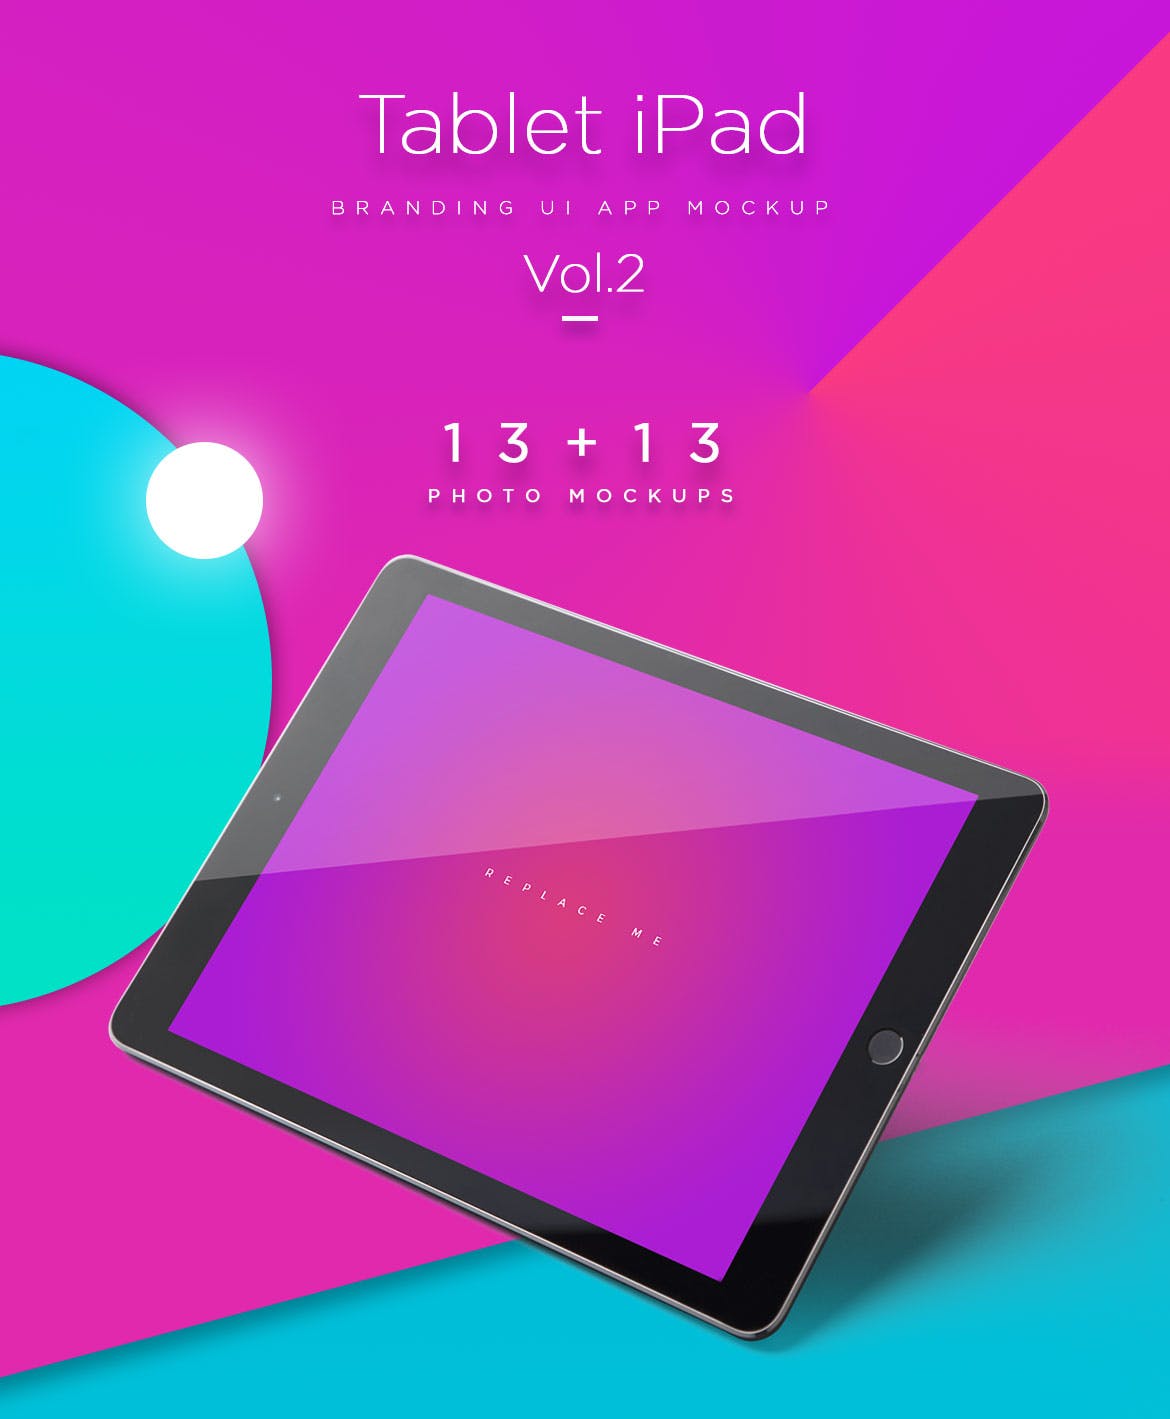 iPad平板电脑APP&Web设计效果图预览样机 iPad Tablet UI Mockups – Vivid Backgrounds Vol.2插图(1)